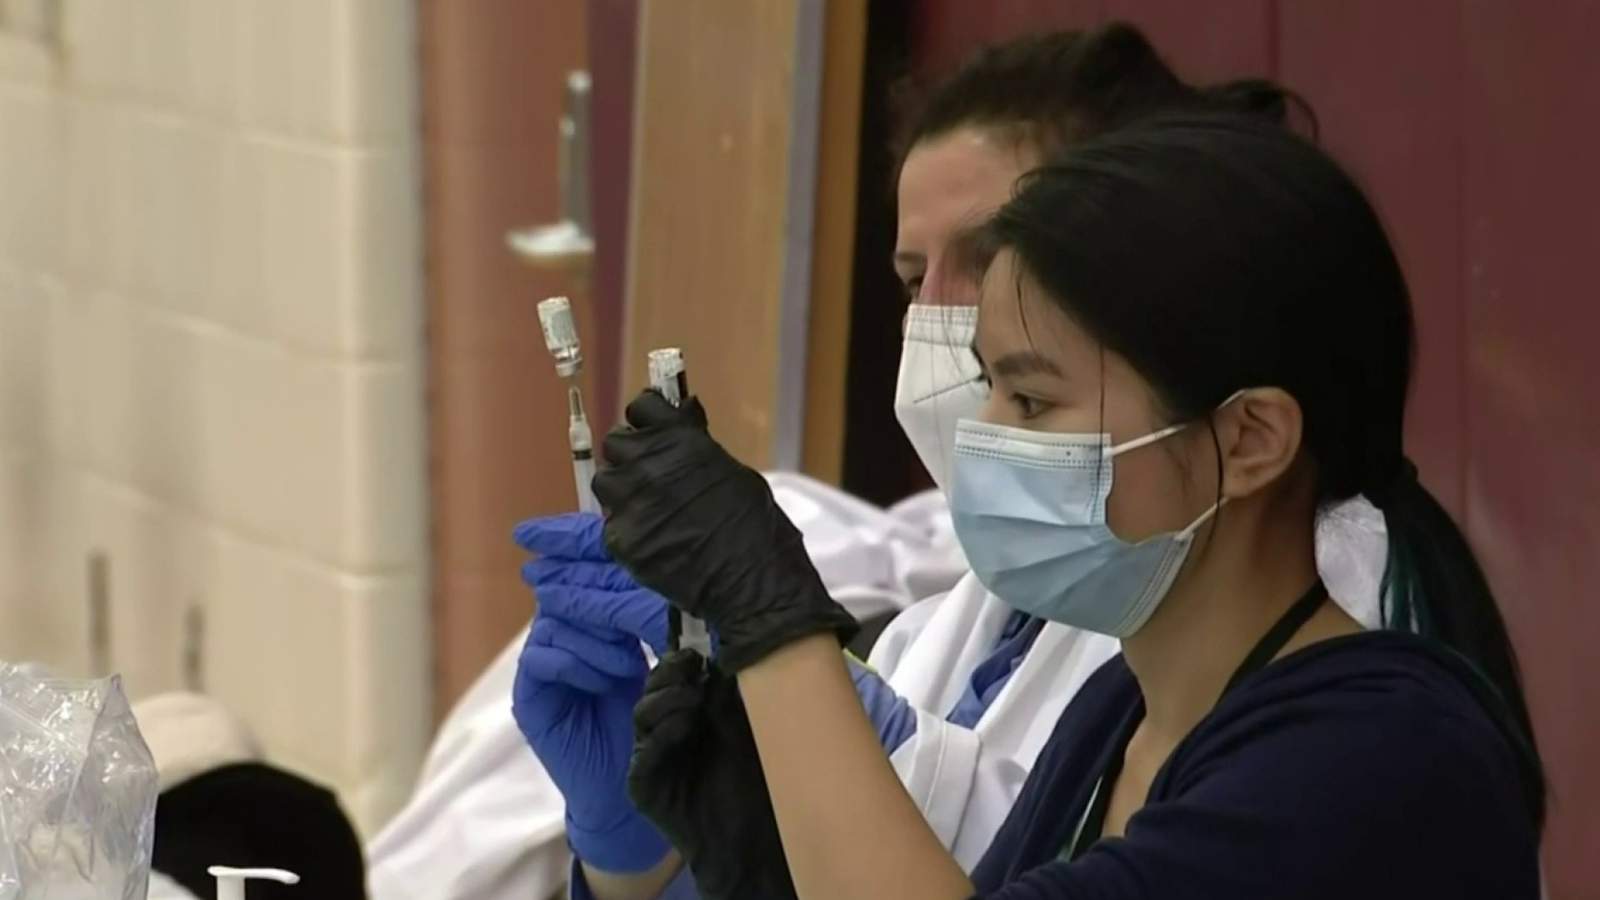 Detroit renews calls for vaccinations as virus surges across city